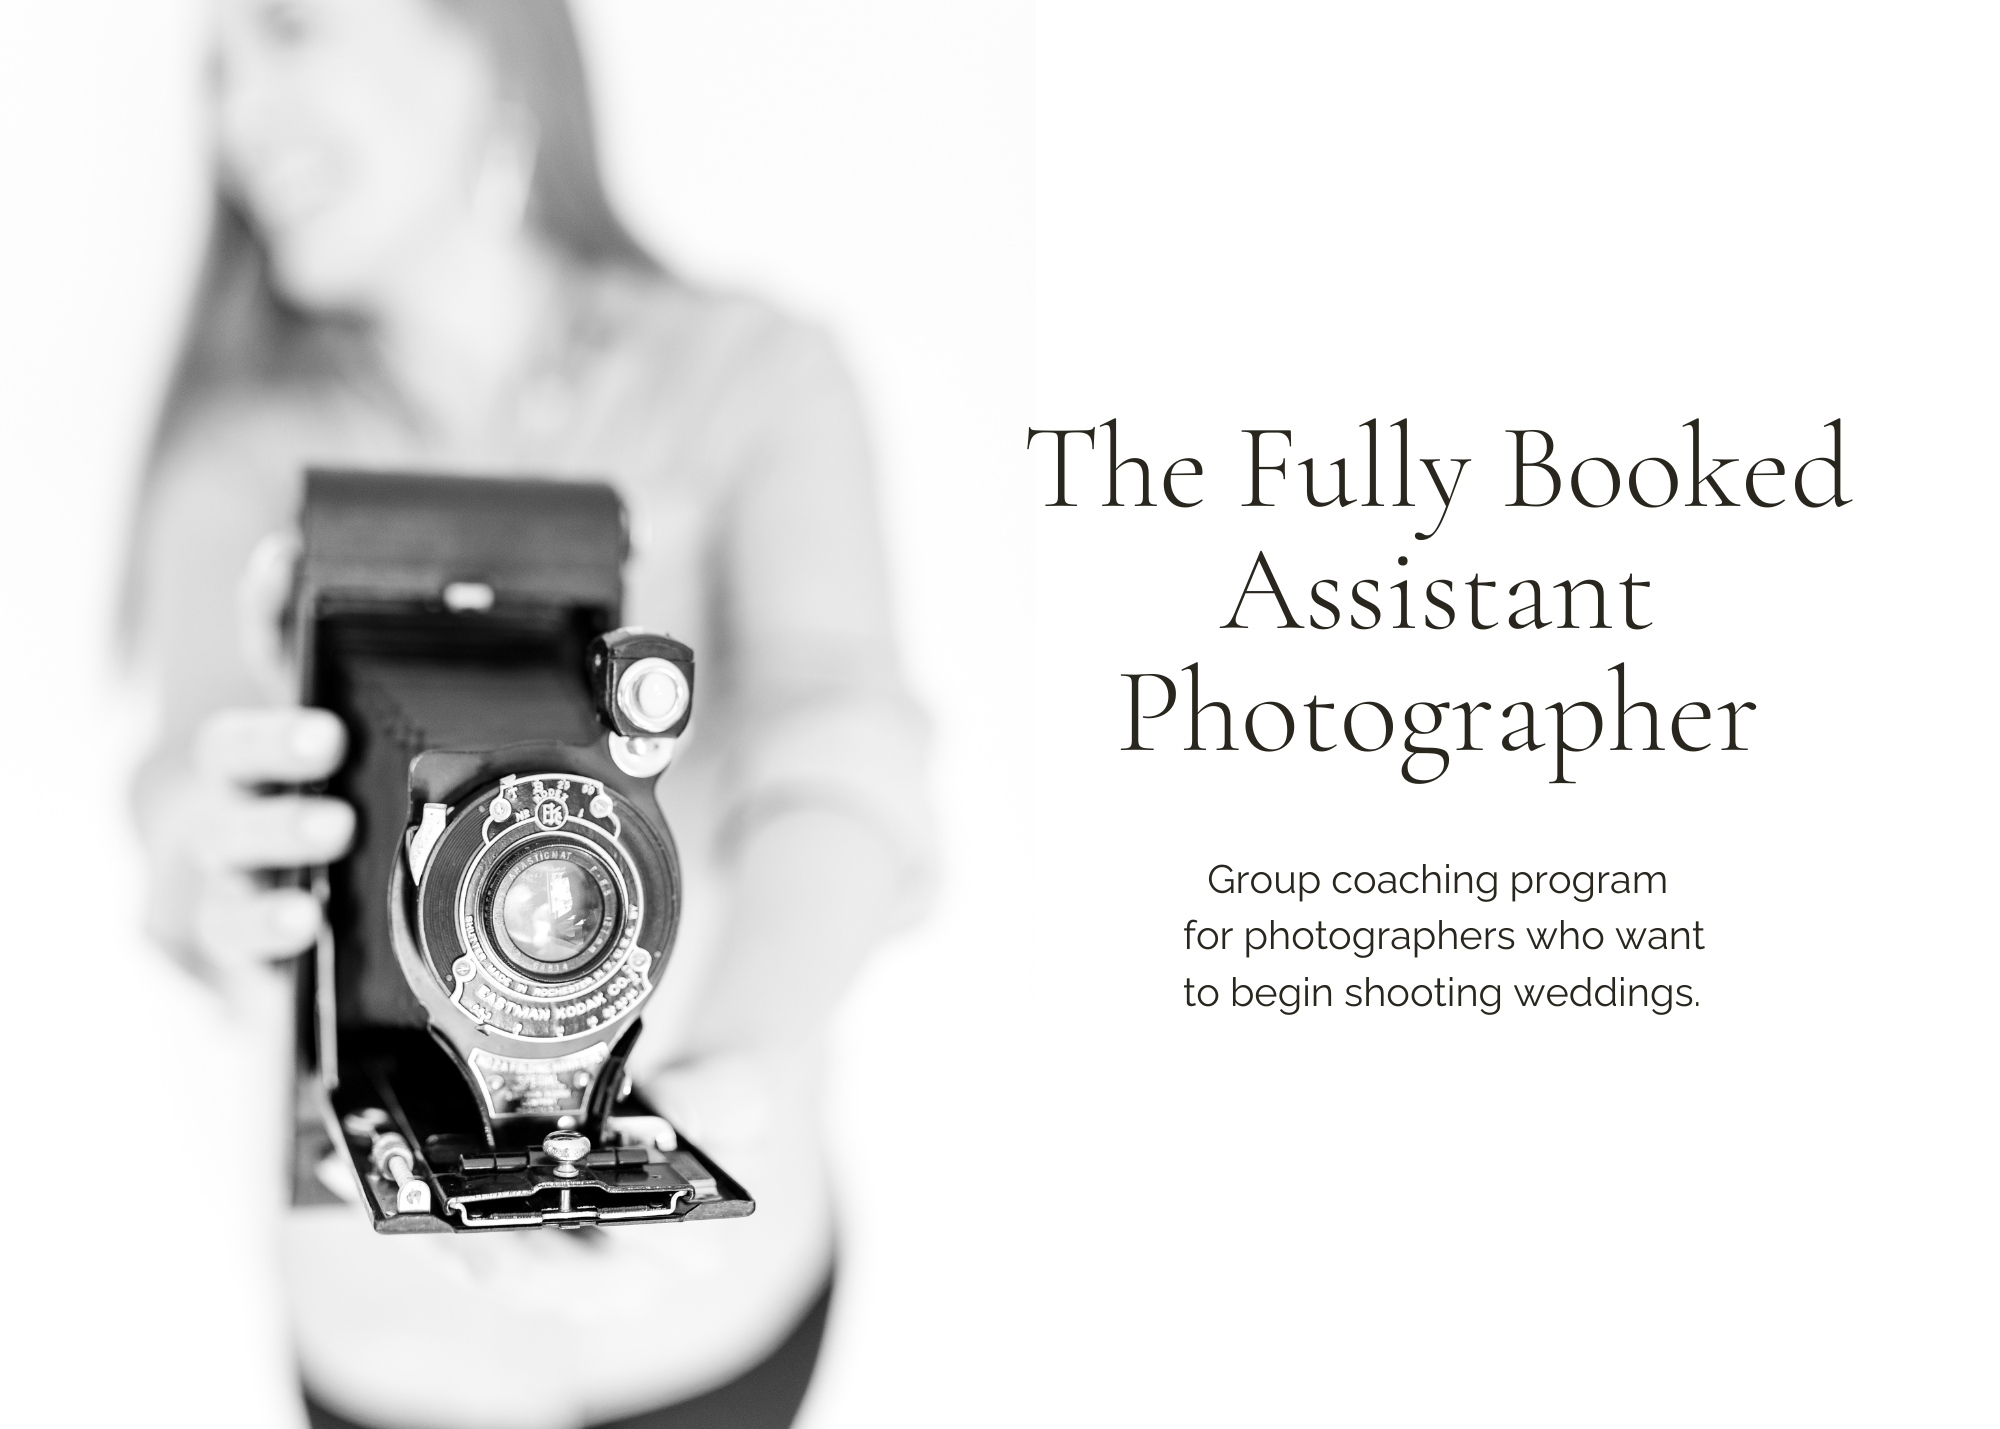 Group coaching program for photographer looking to begin shooting weddings.